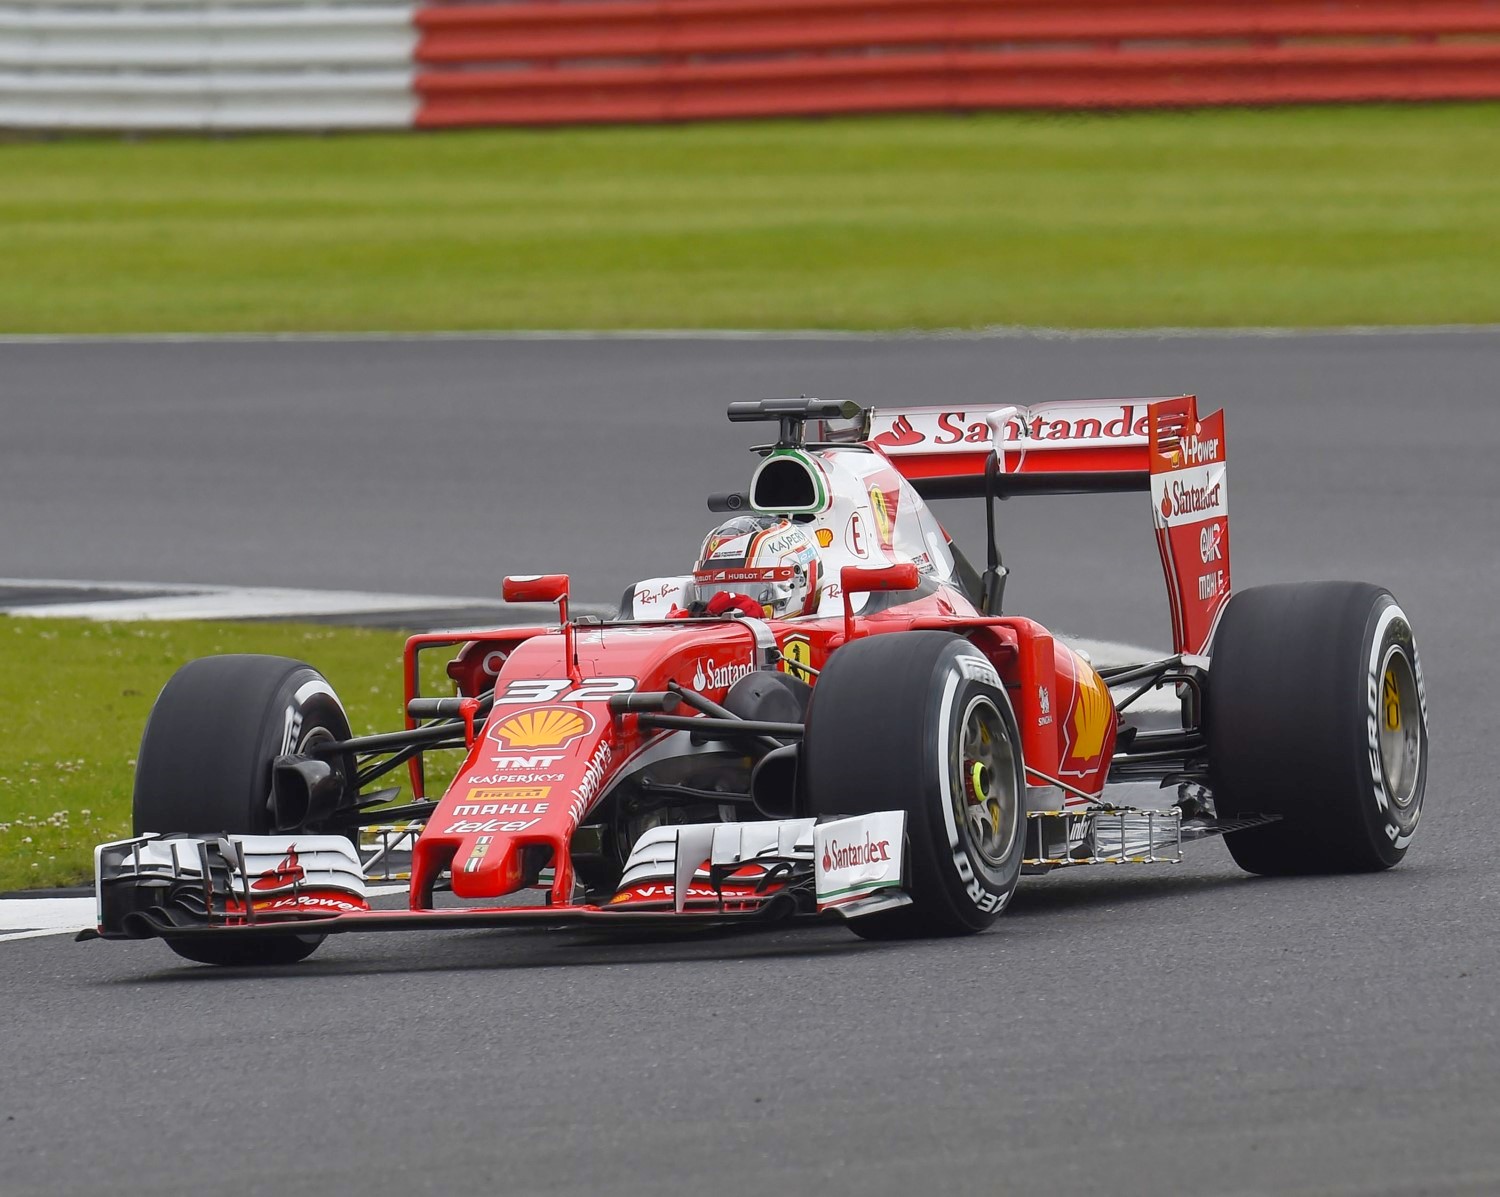 Charles Leclerc in the Ferrari